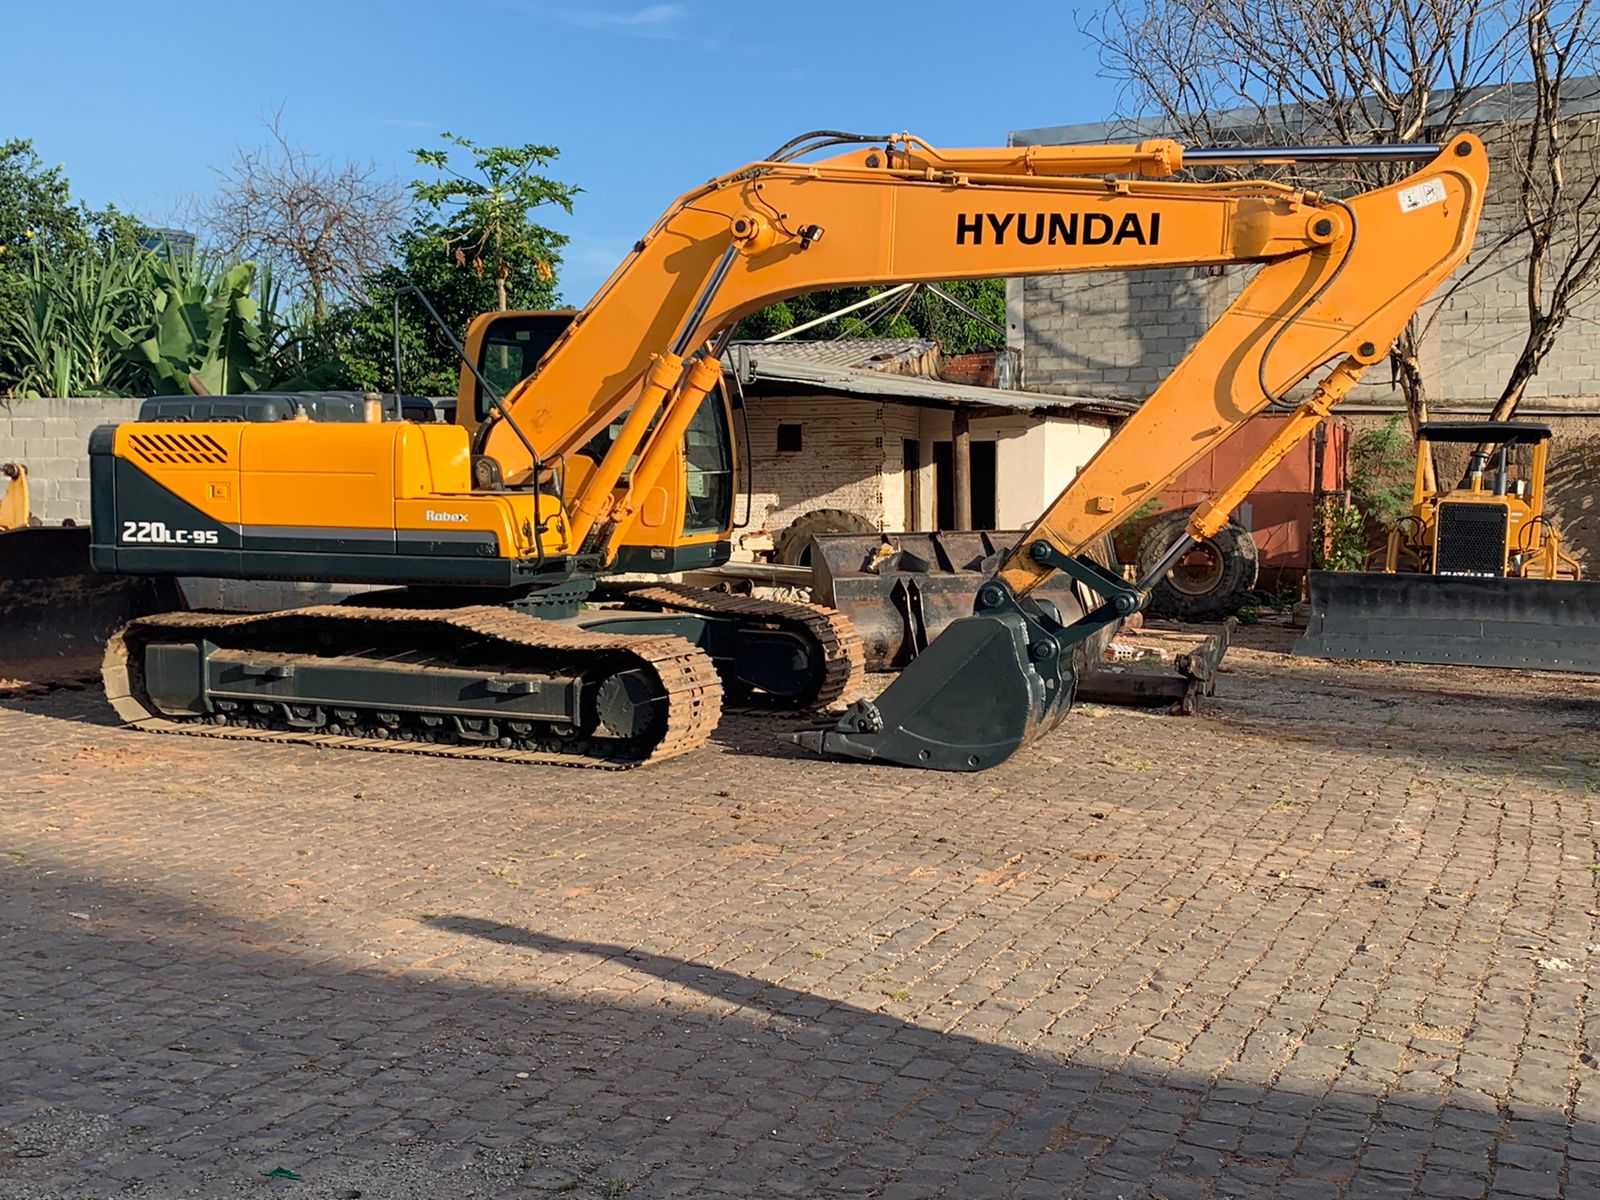 Escavadeira Hyundai R220LC-9s